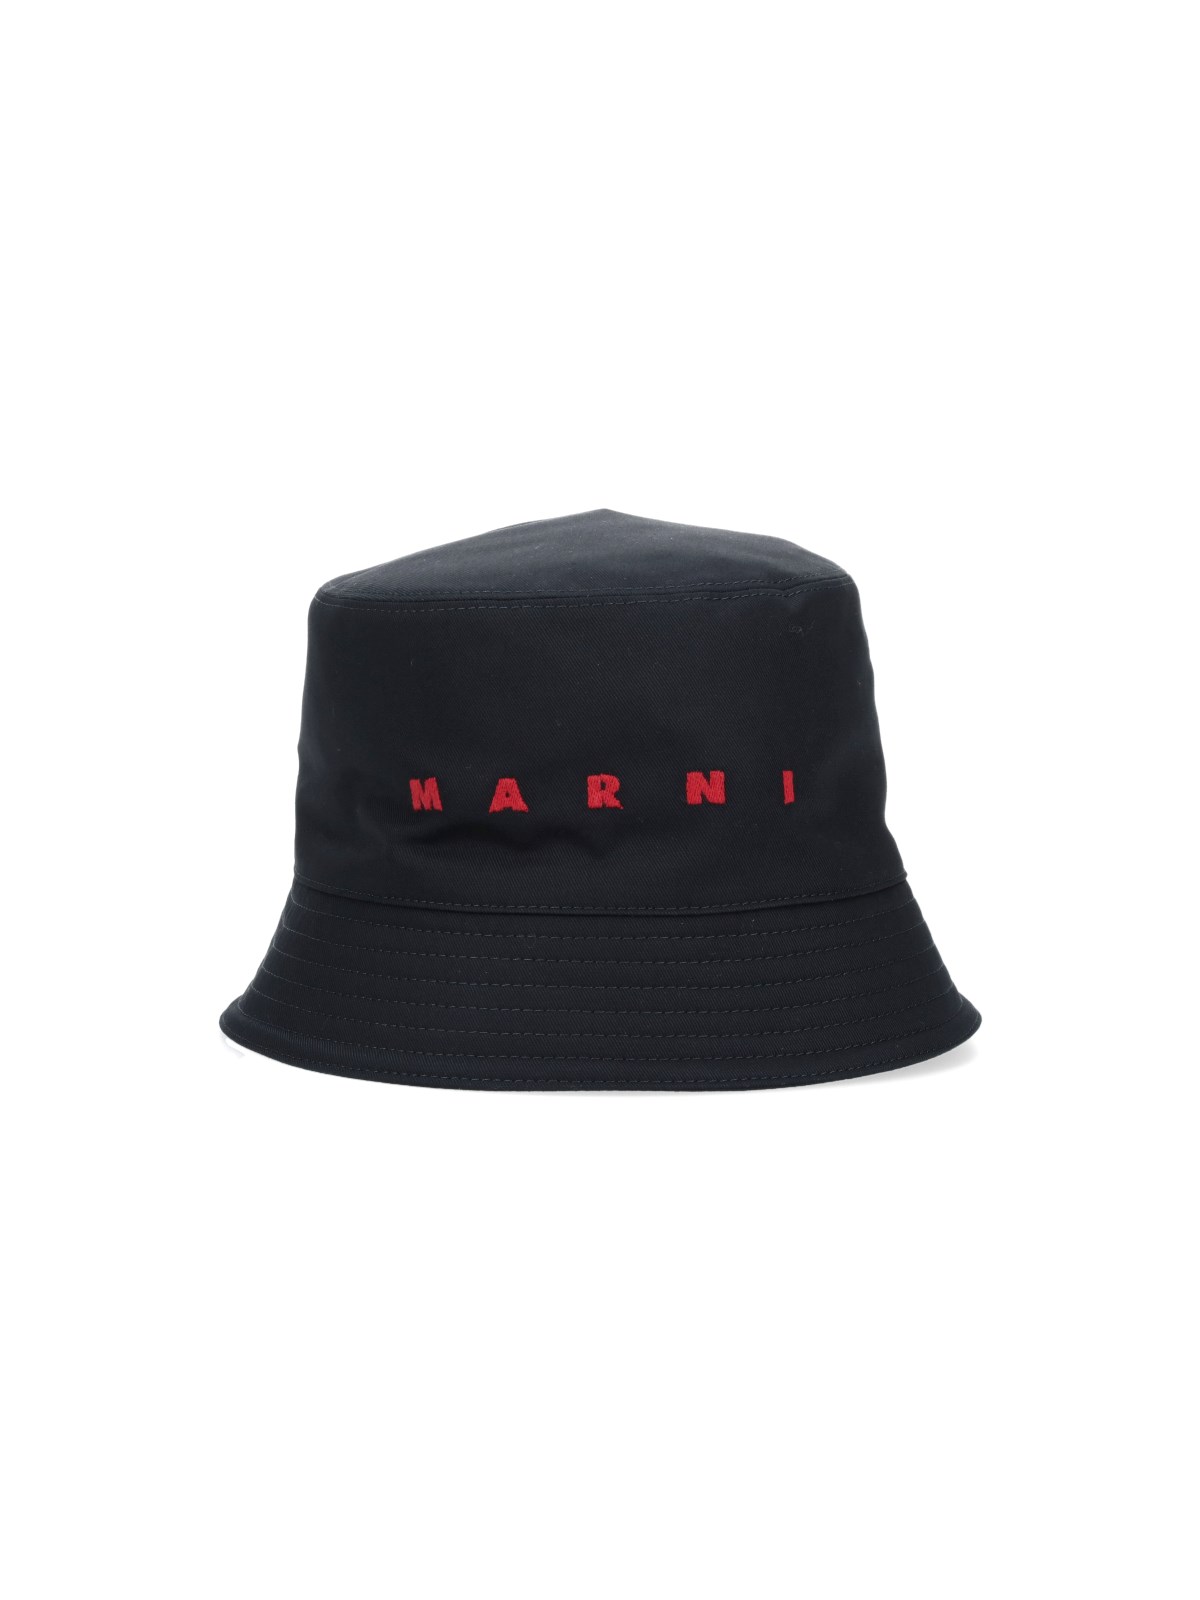 Marni Logo Bucket Hat In Black  